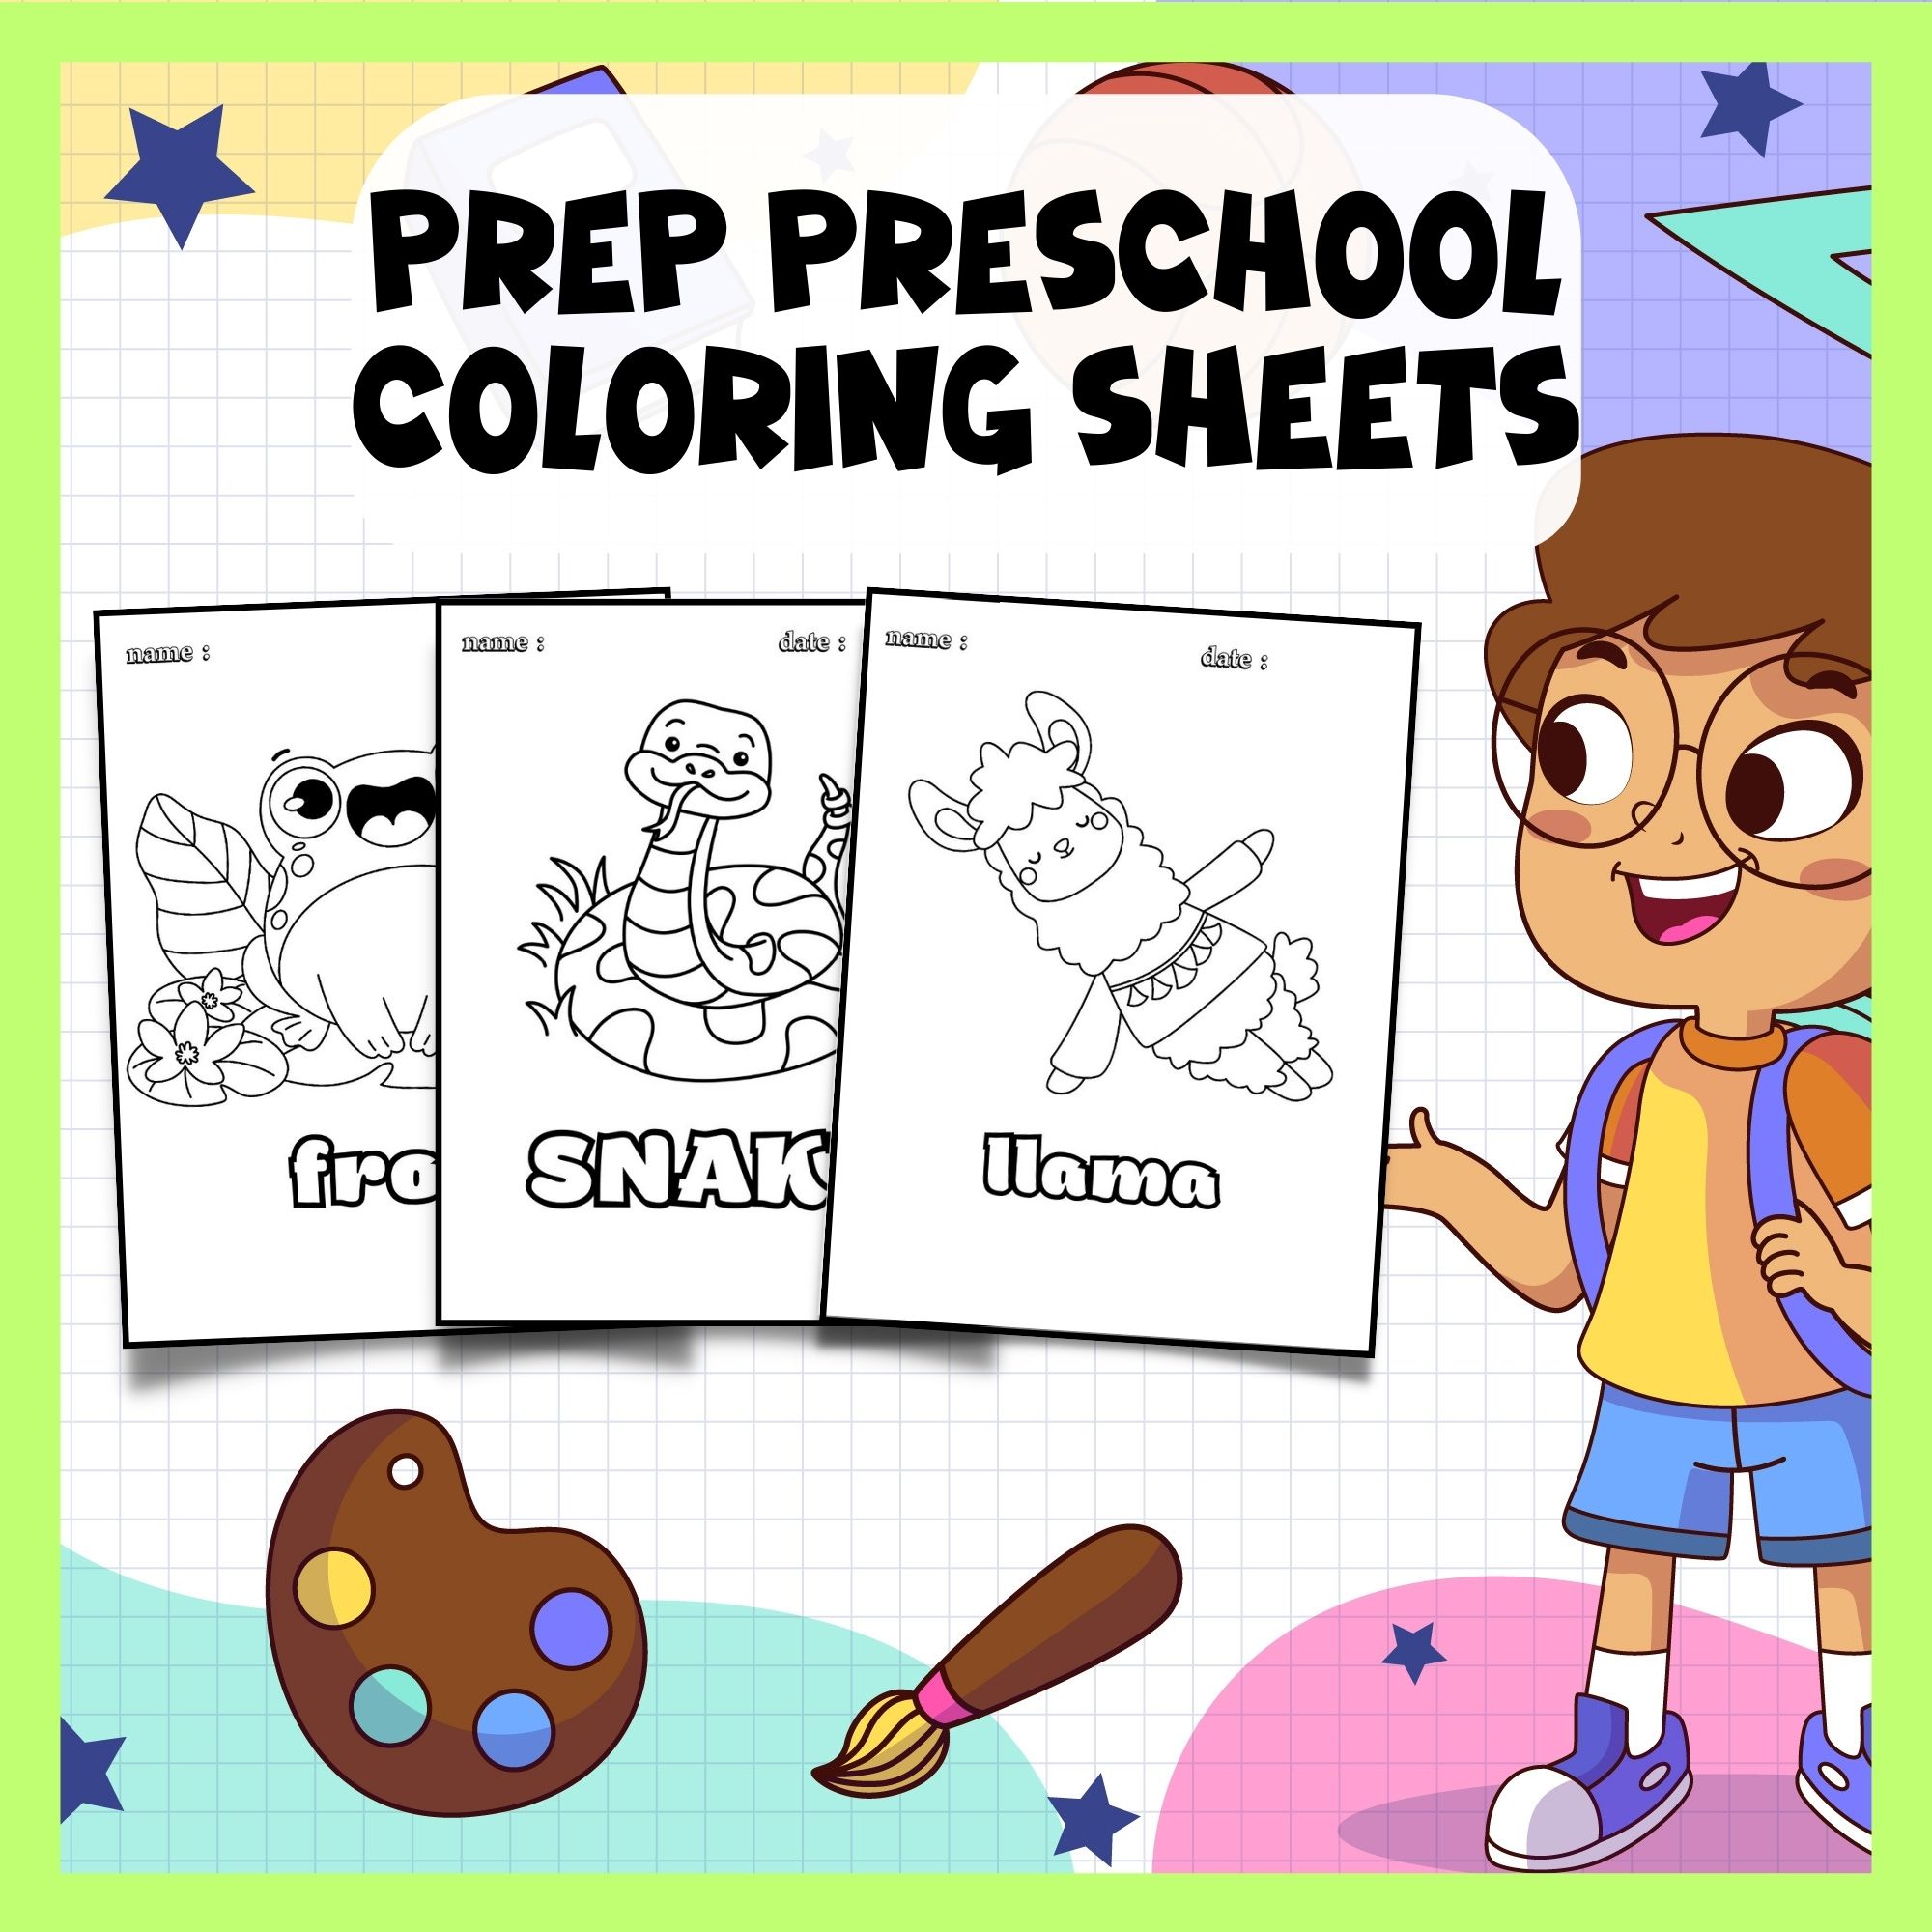 Prep preschool coloring sheets made by teachers